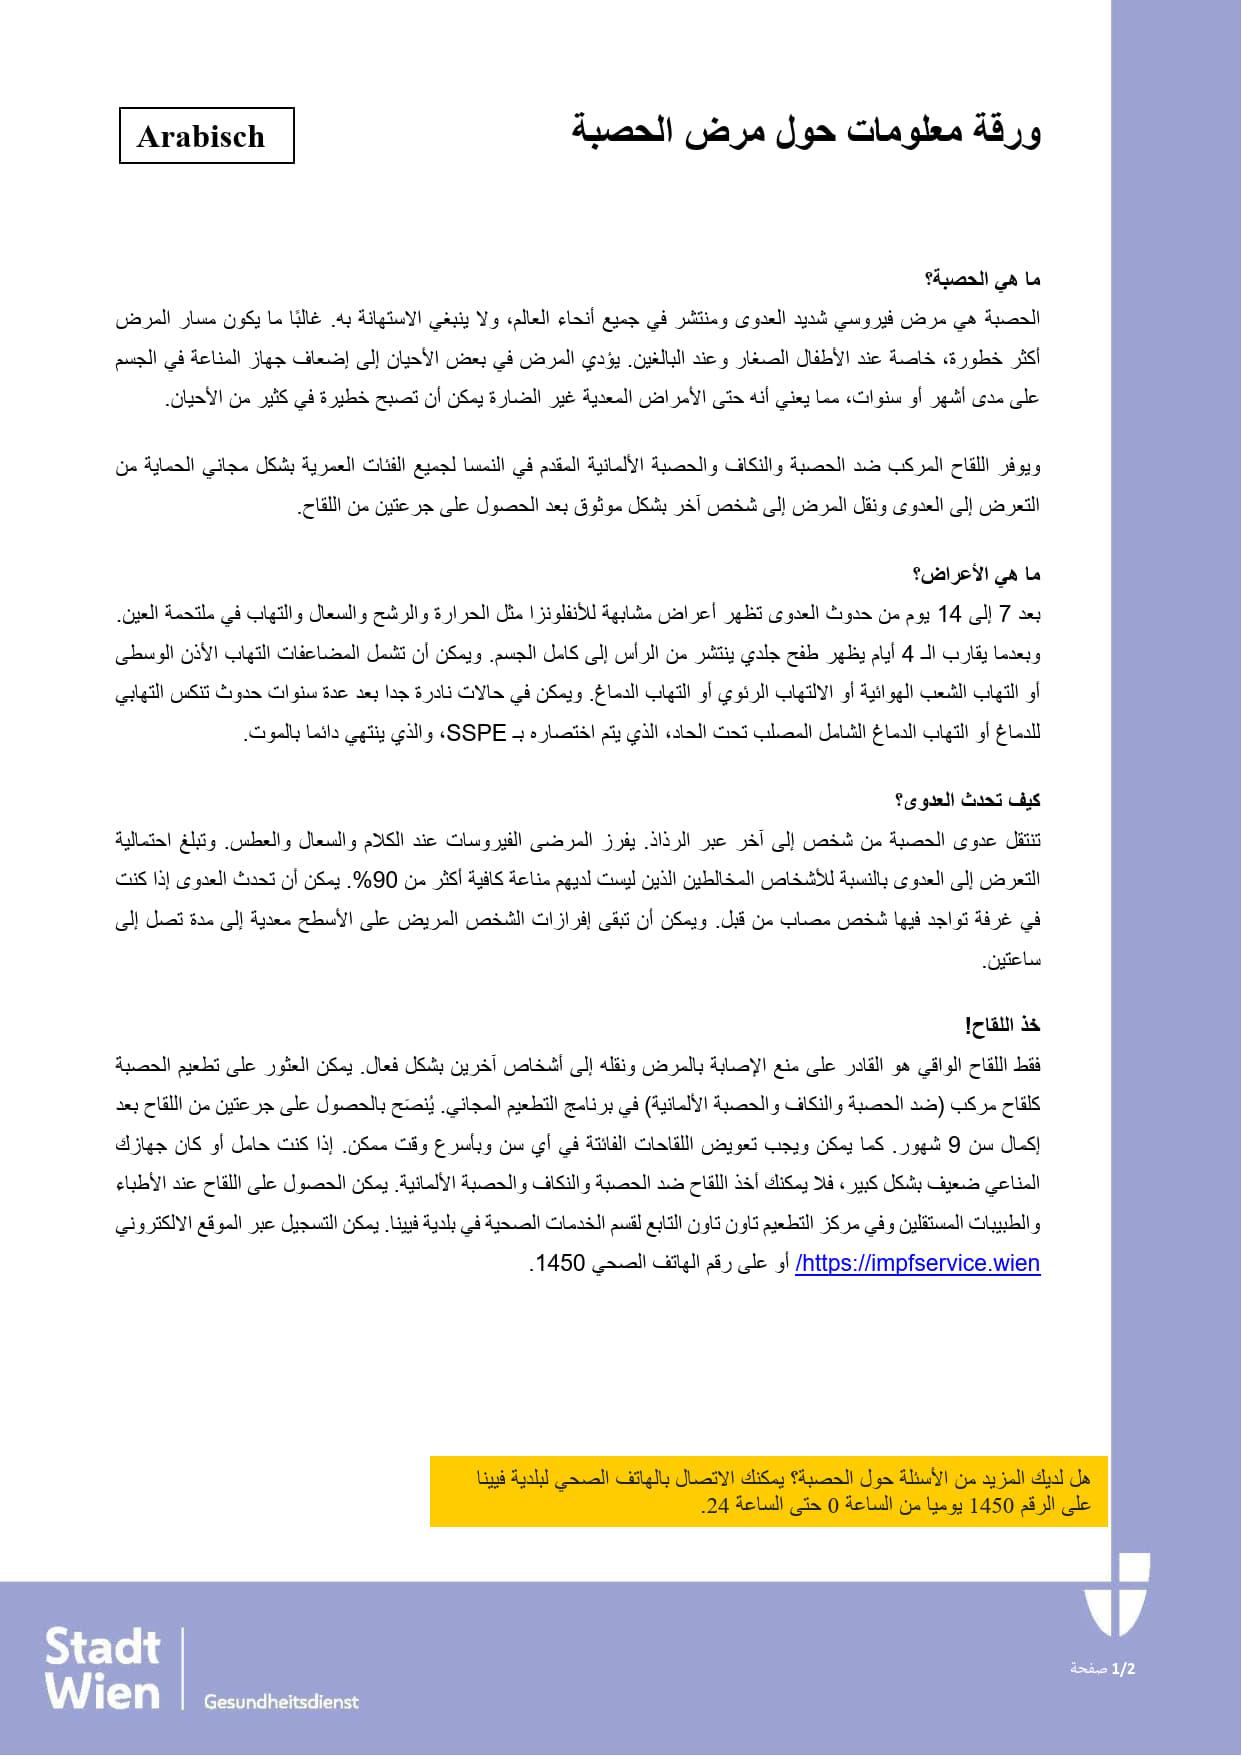 Masern_Infoblatt_arabisch_1